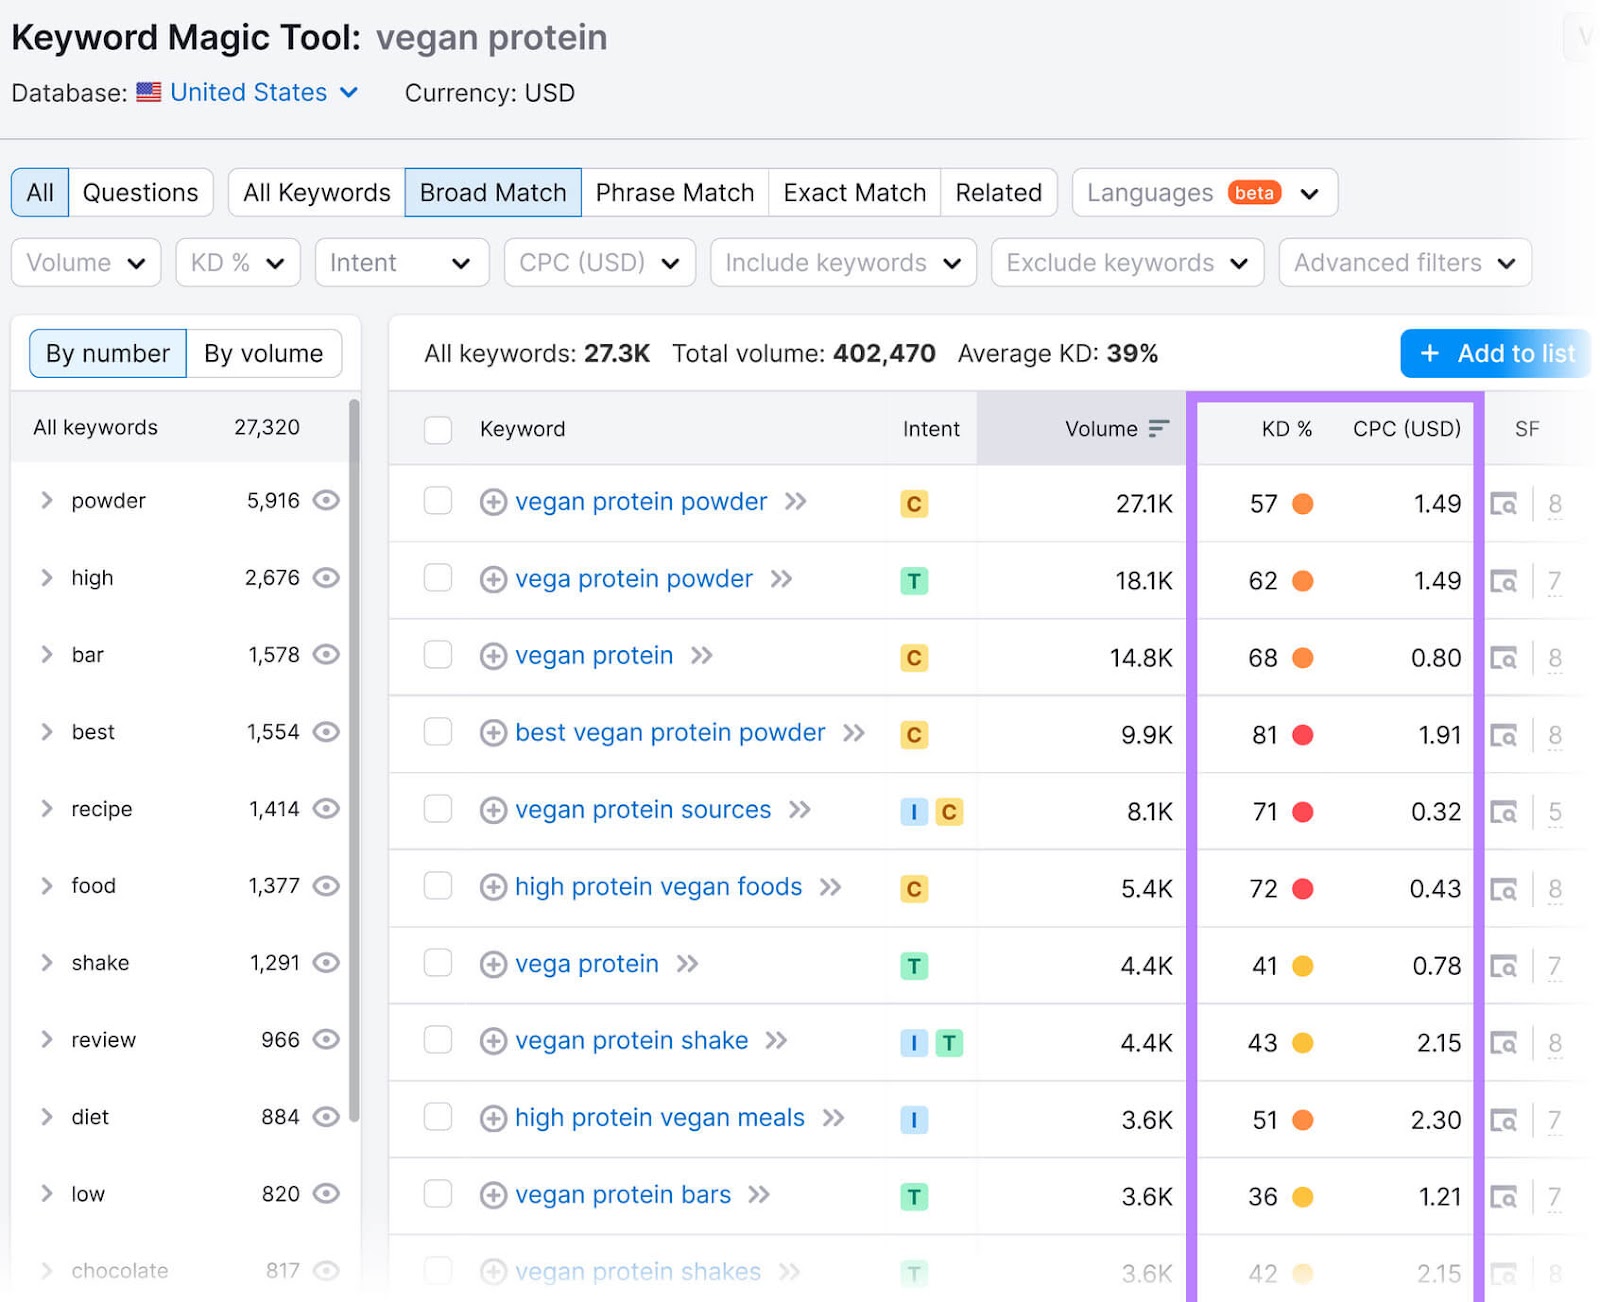 Keyword Magic Tool results for "vegan protein" keyword